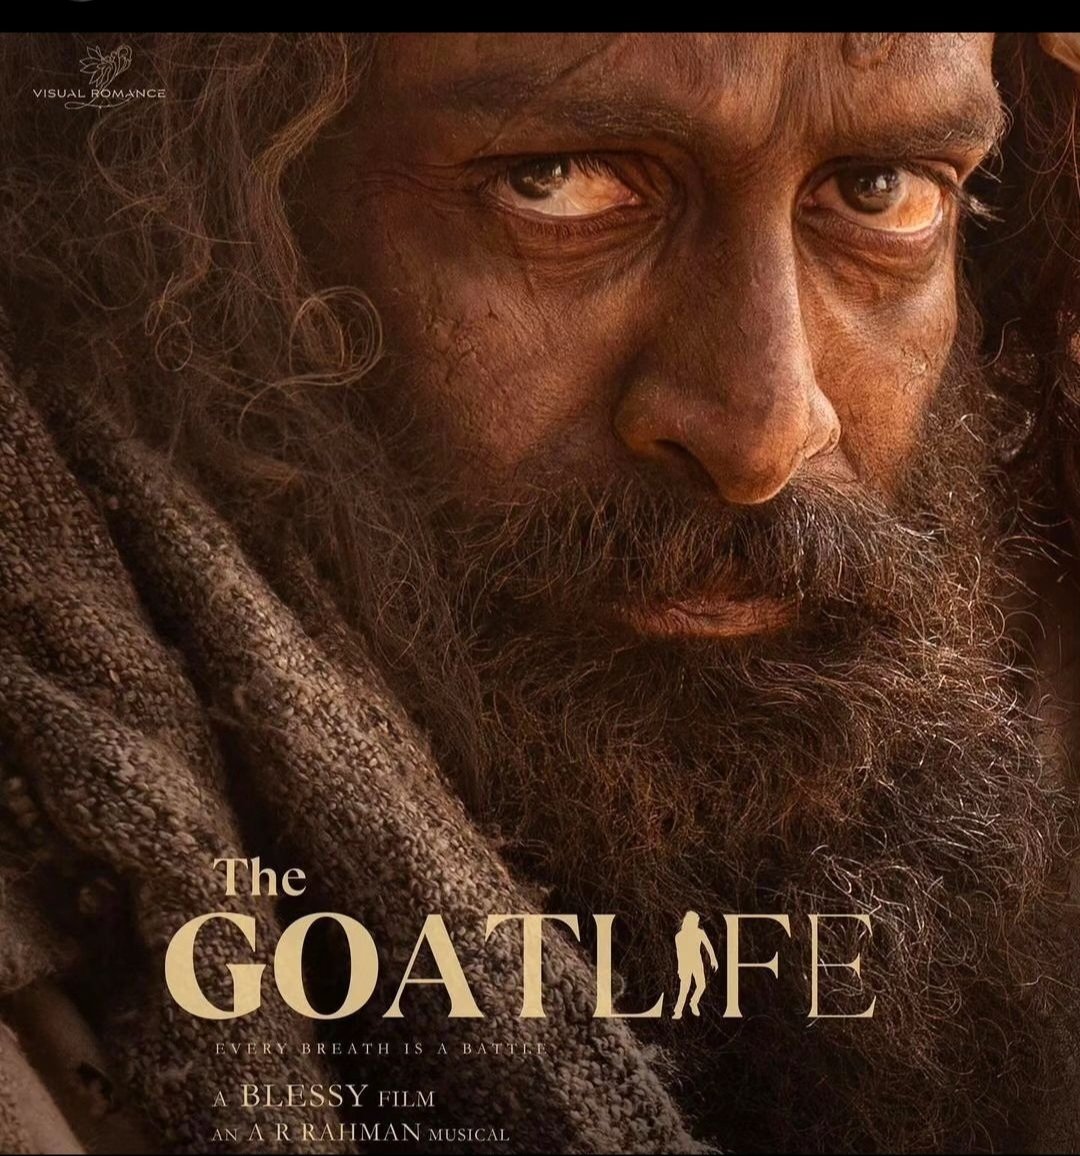 Aadujeevitham The Goat Life movie In hindi